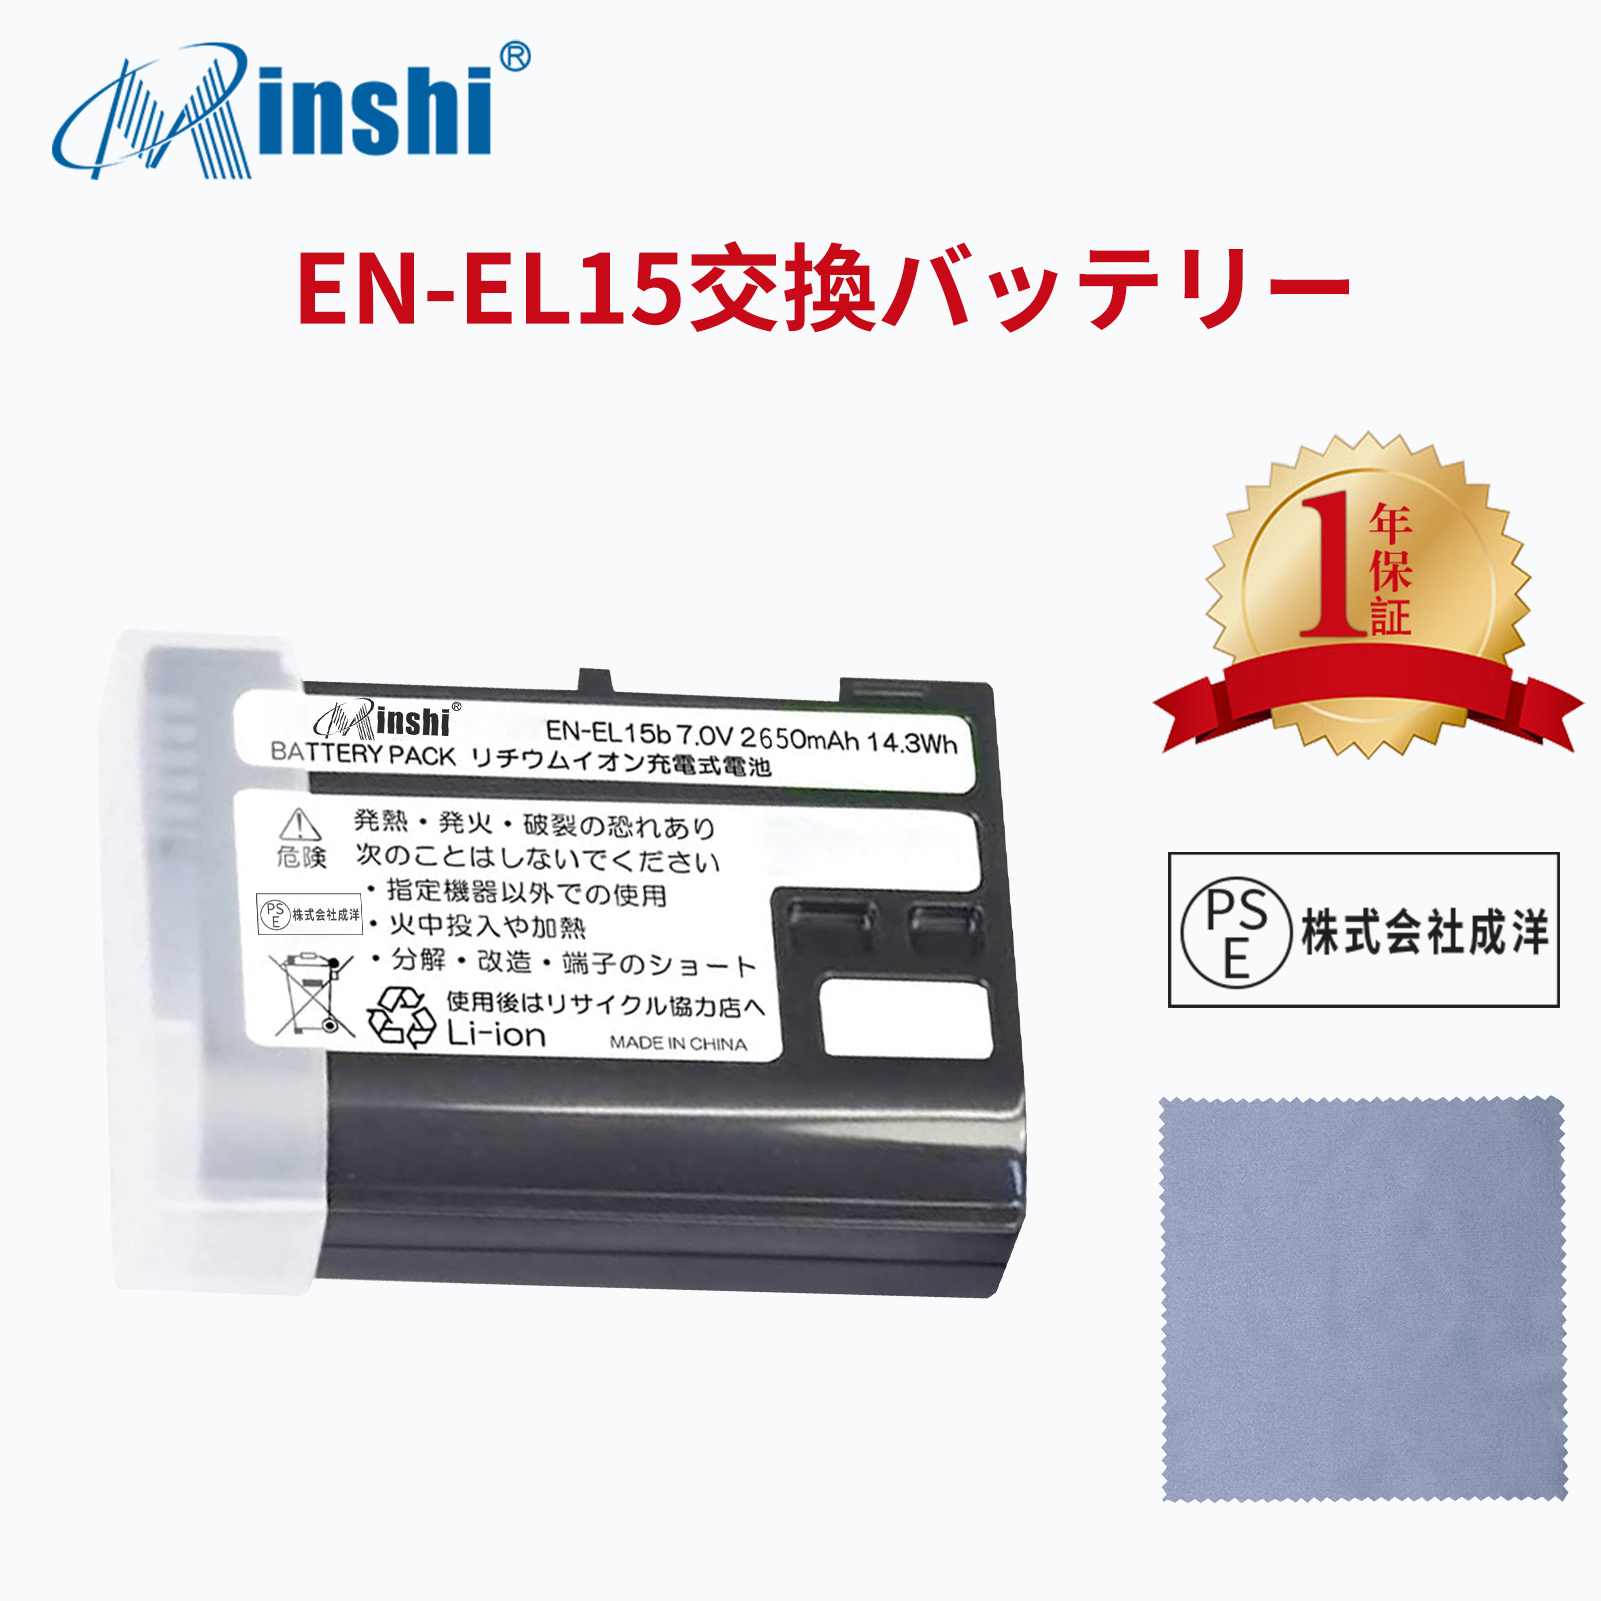 【清潔布ー付】minshi Nikon Z7 EN-EL15  EN-EL15C 【2650mAh 7.0V 】 Z6 Z7 D750 PSE認定済 高品質交換用バッテリー